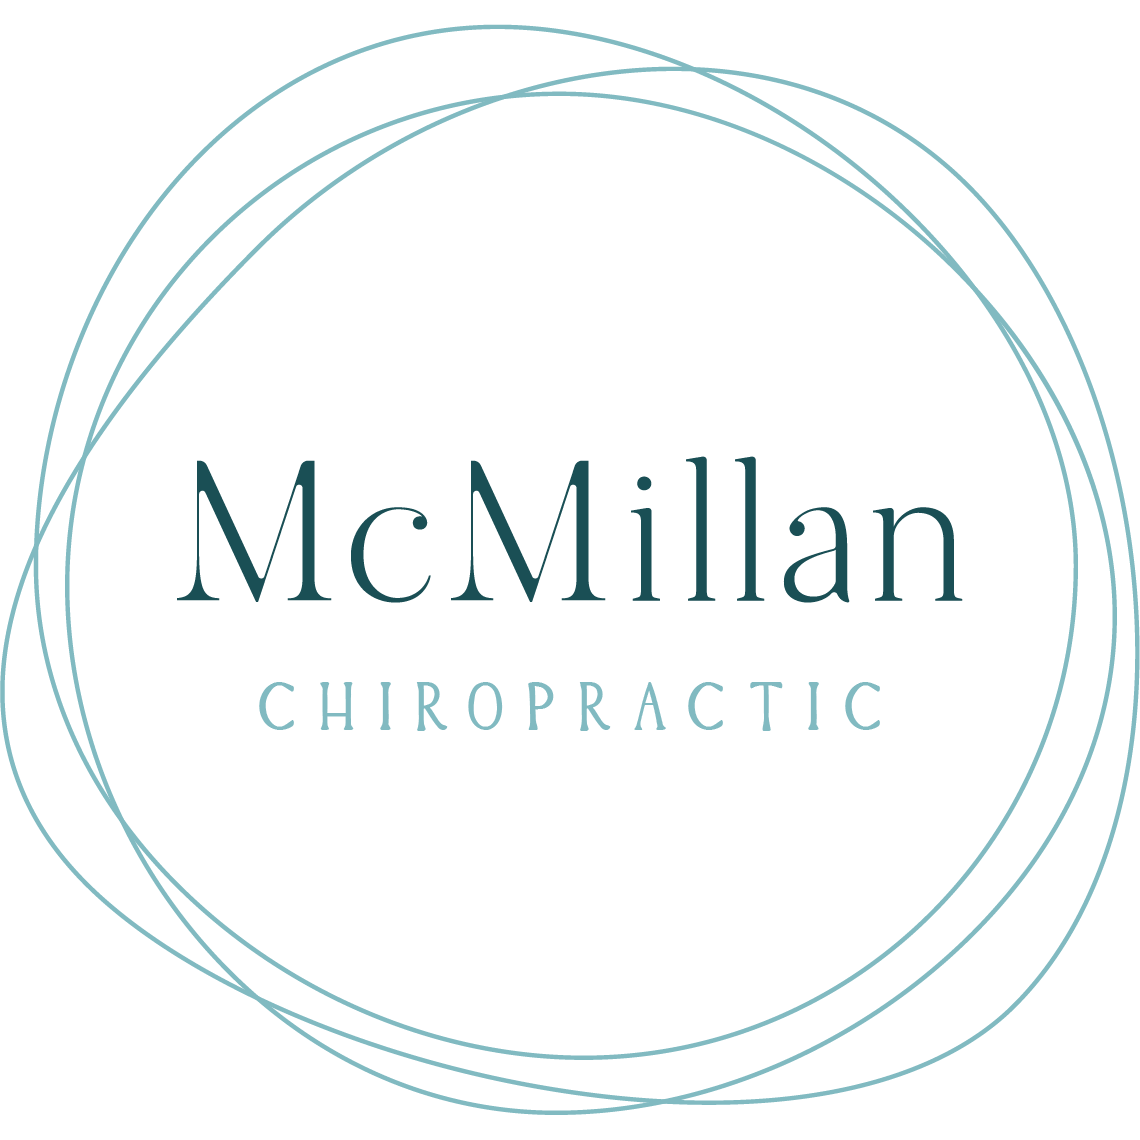 McMillan Chiropractic Centre - Traralgon, VIC 3844 - (03) 5174 9033 | ShowMeLocal.com